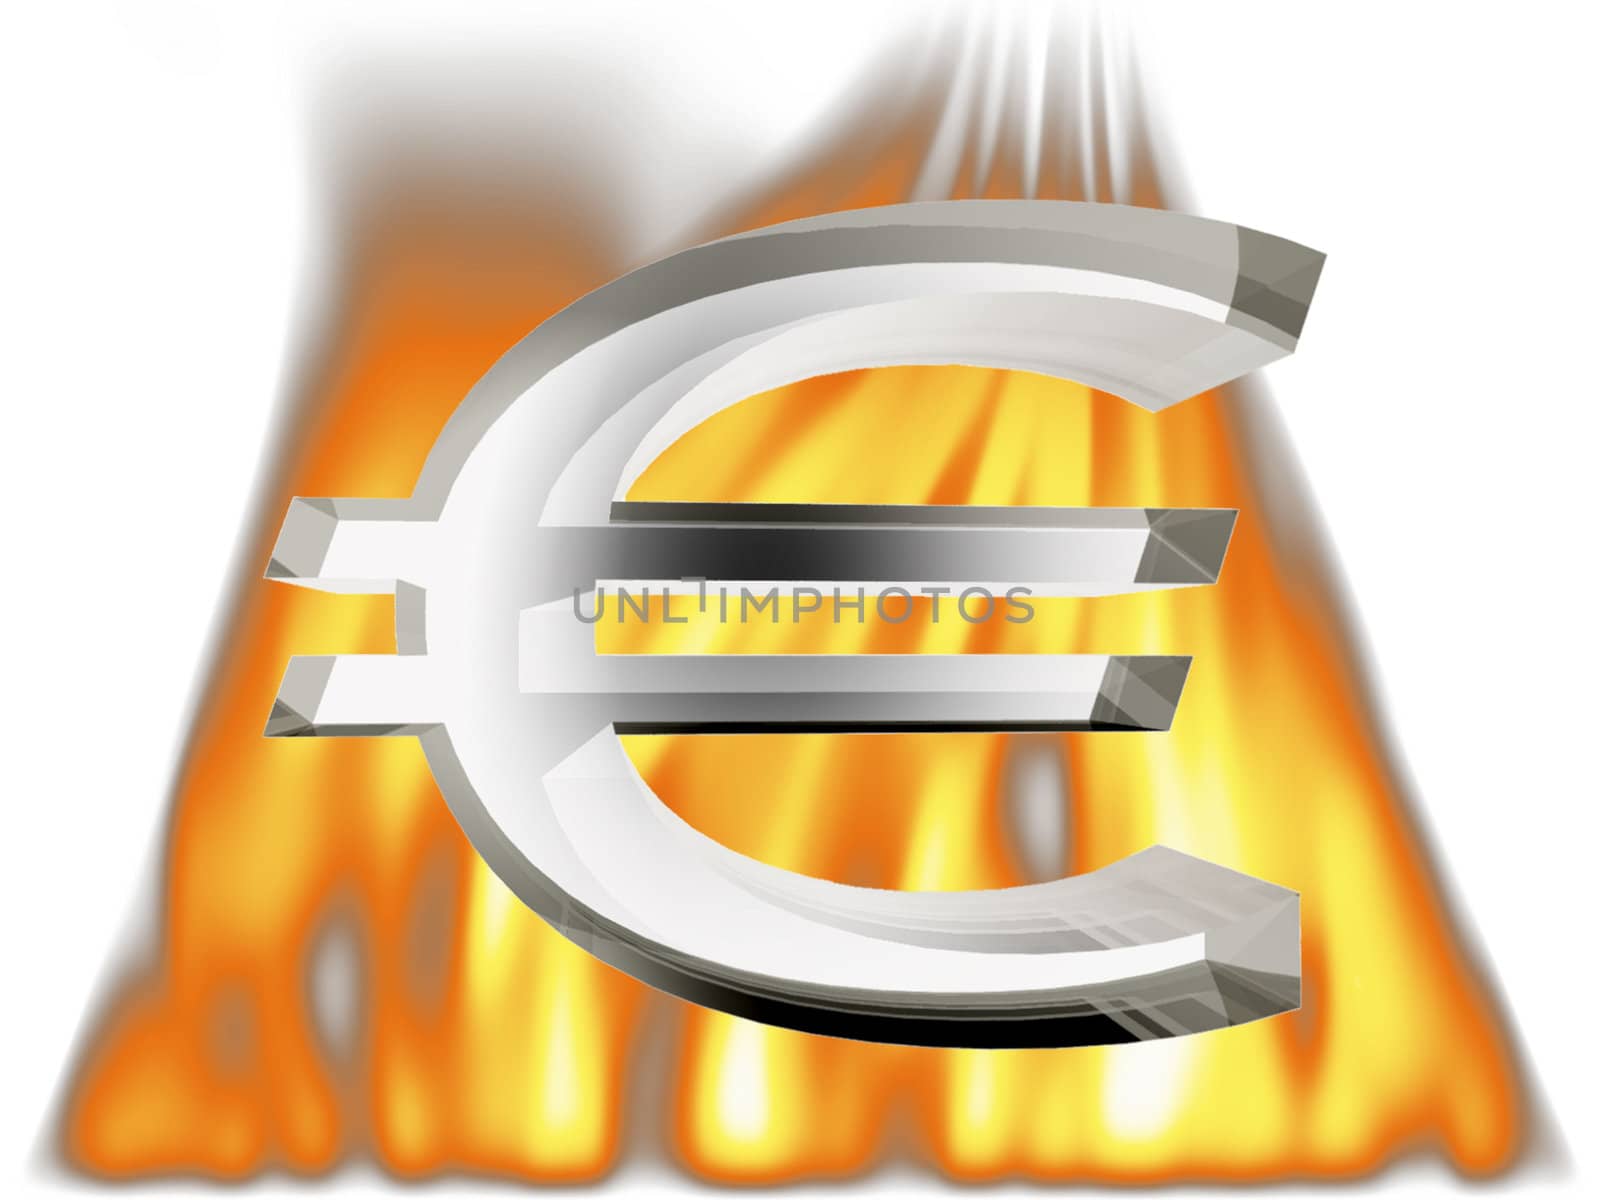 euro symbol on fire by njaj